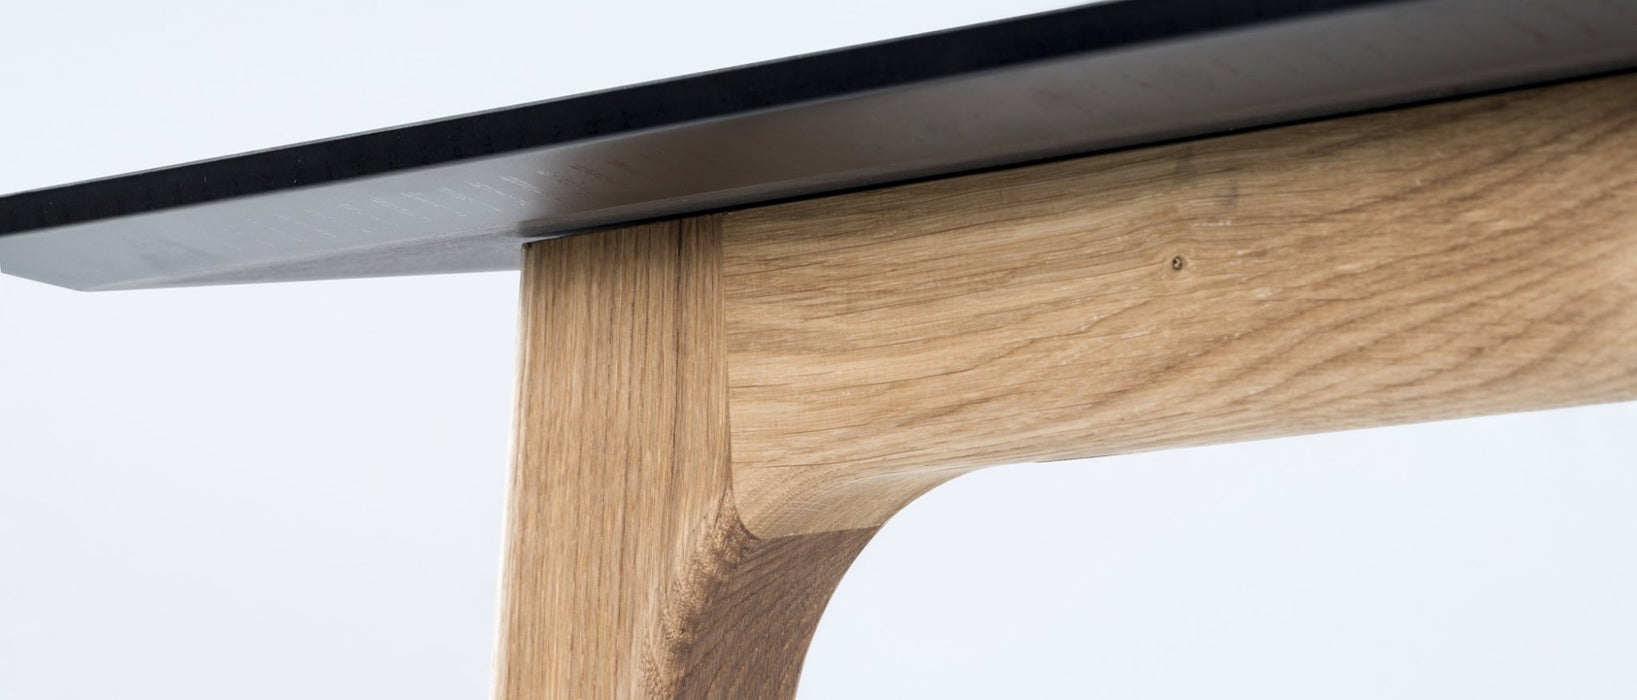 GATE Dining Table 208cm // Black Linoleum Top, Black Edge - Solid Oiled Oak Legs